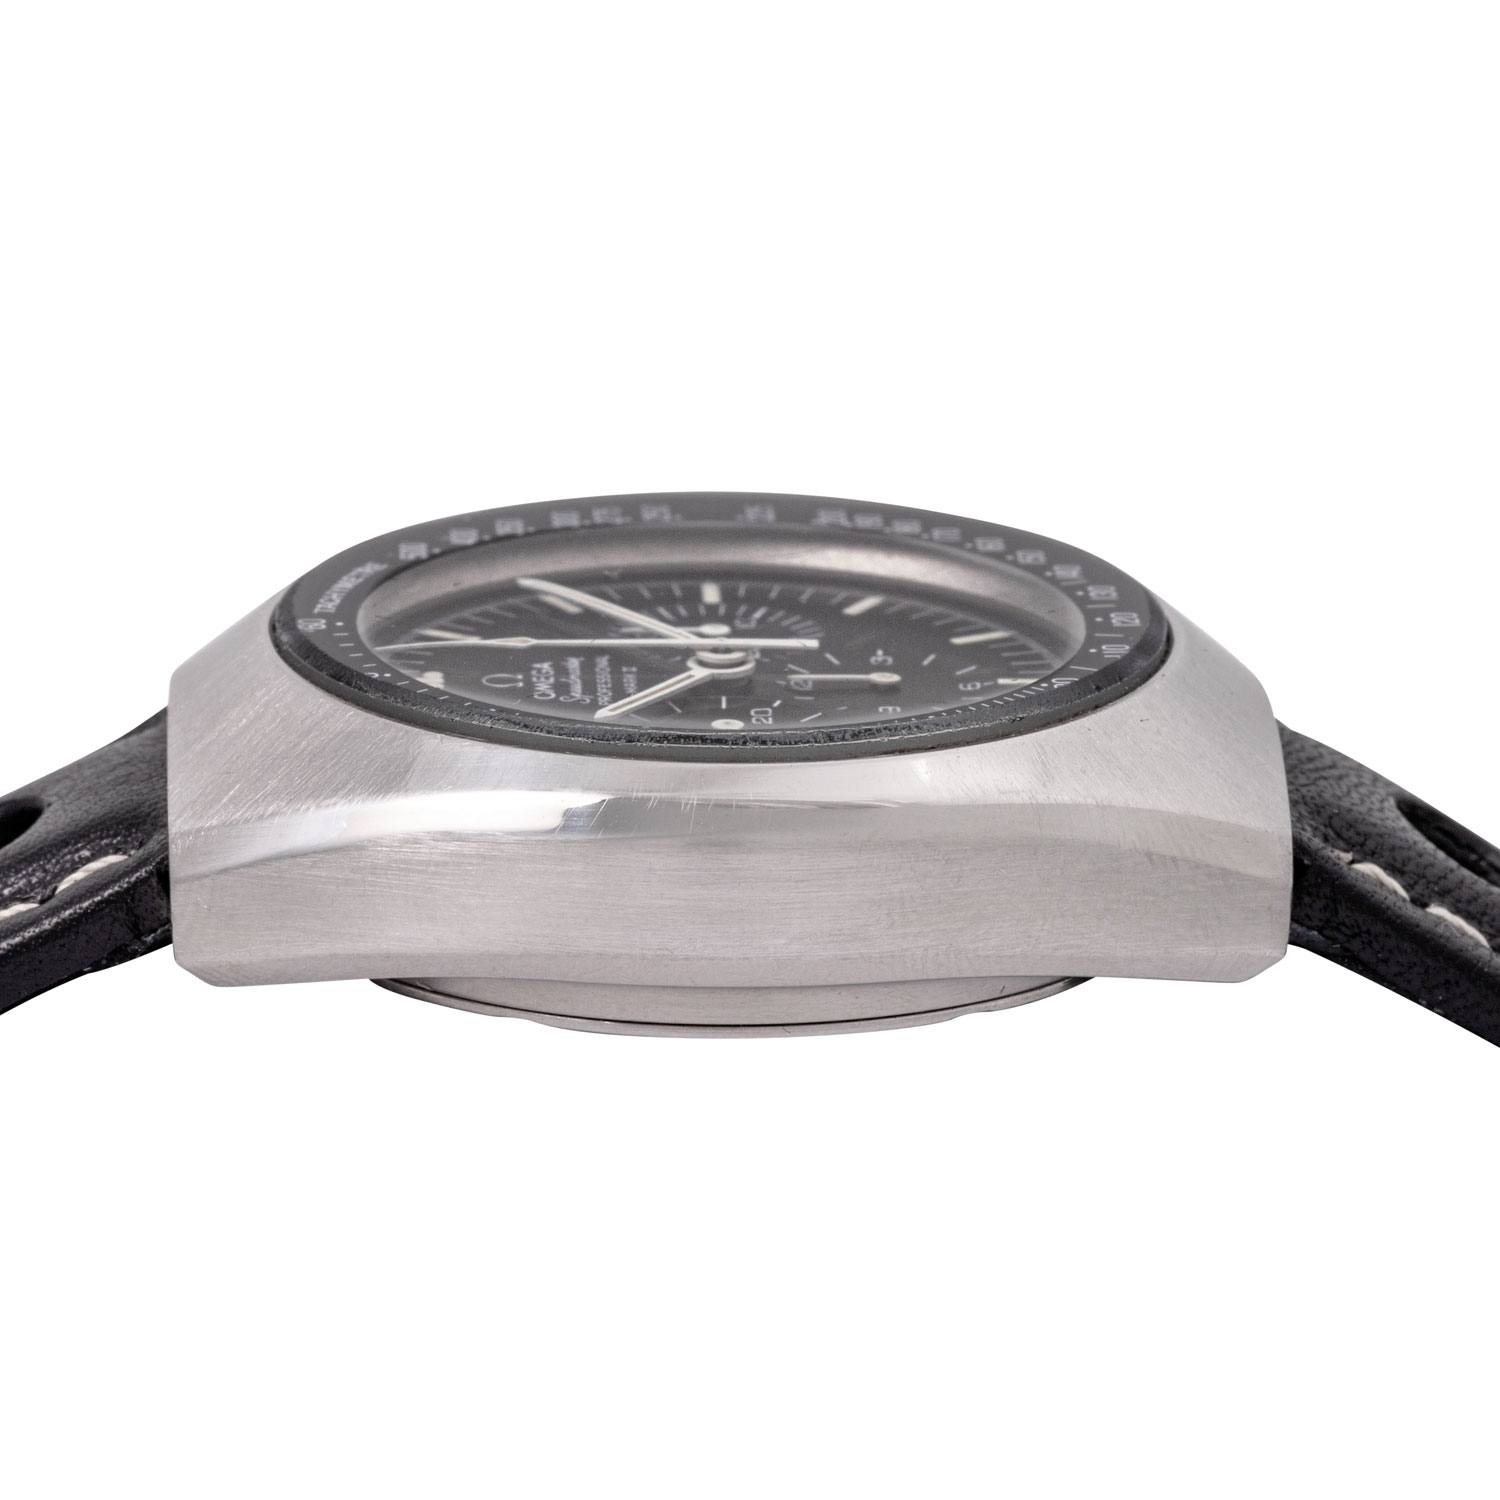 OMEGA Speedmaster Professional Mark II Herren Chronograph, Ref. 145.014. - Image 4 of 7